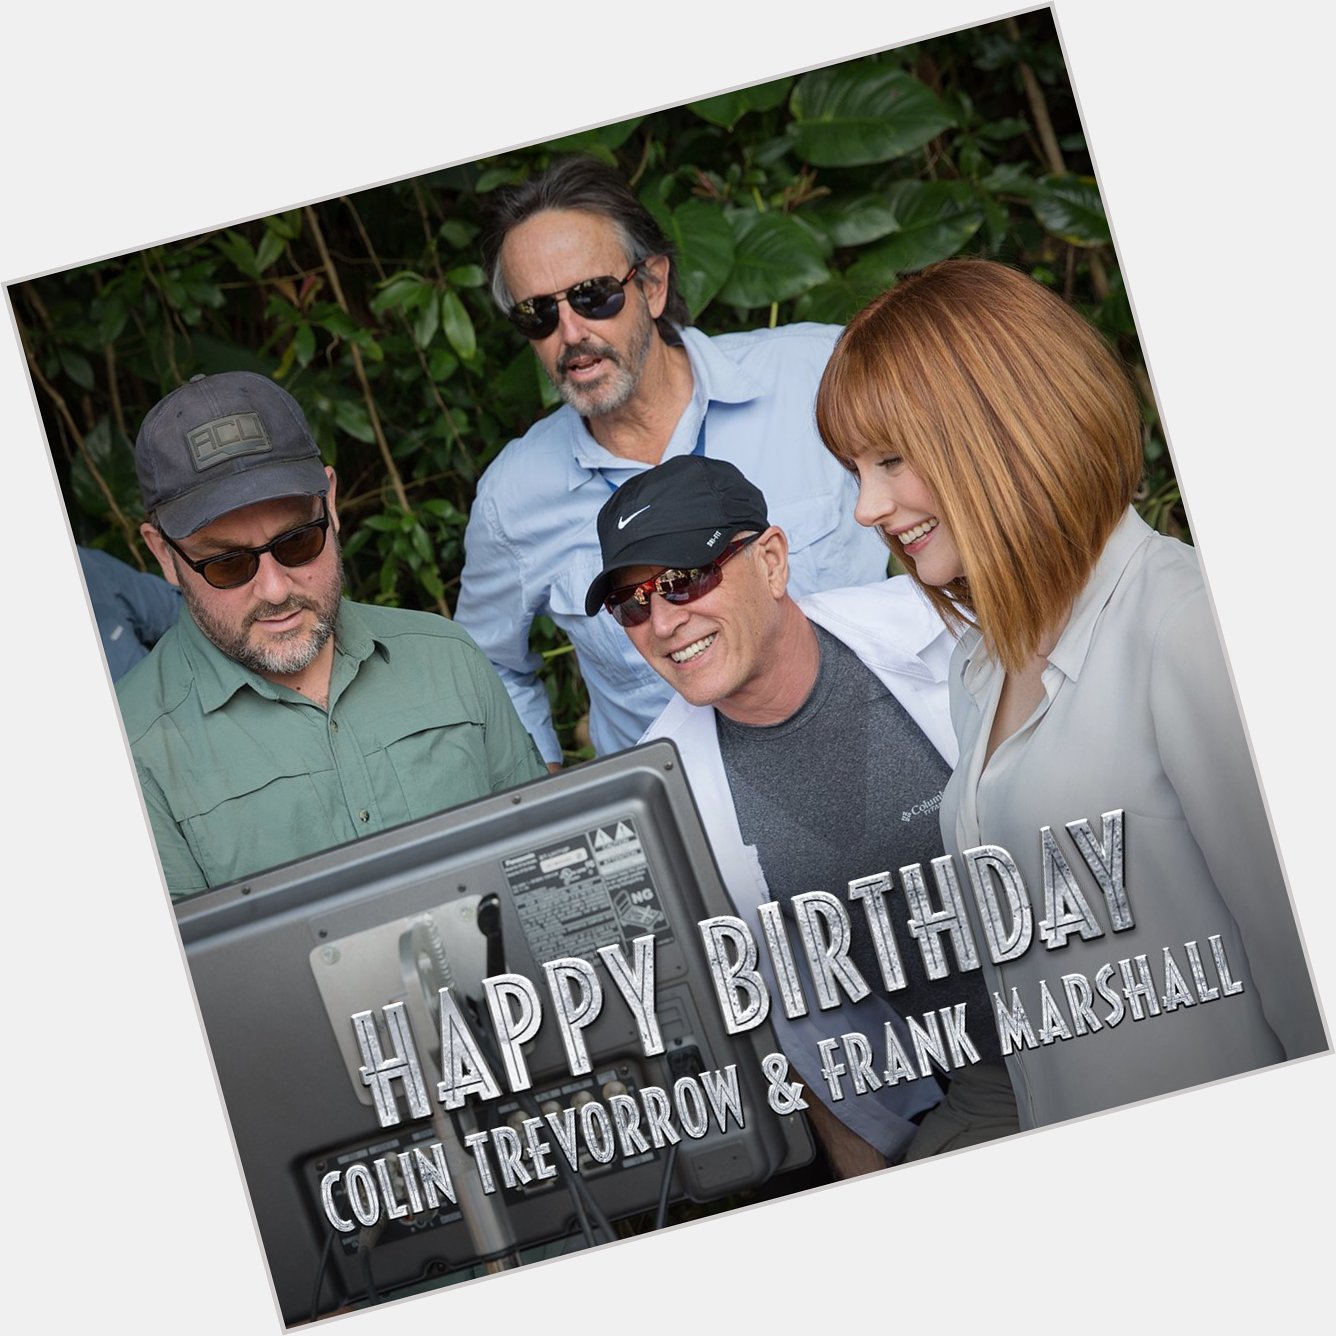 Happy birthday to Jurassic World: Dominion director, Colin Trevorrow, and producer, Frank Marshall. 